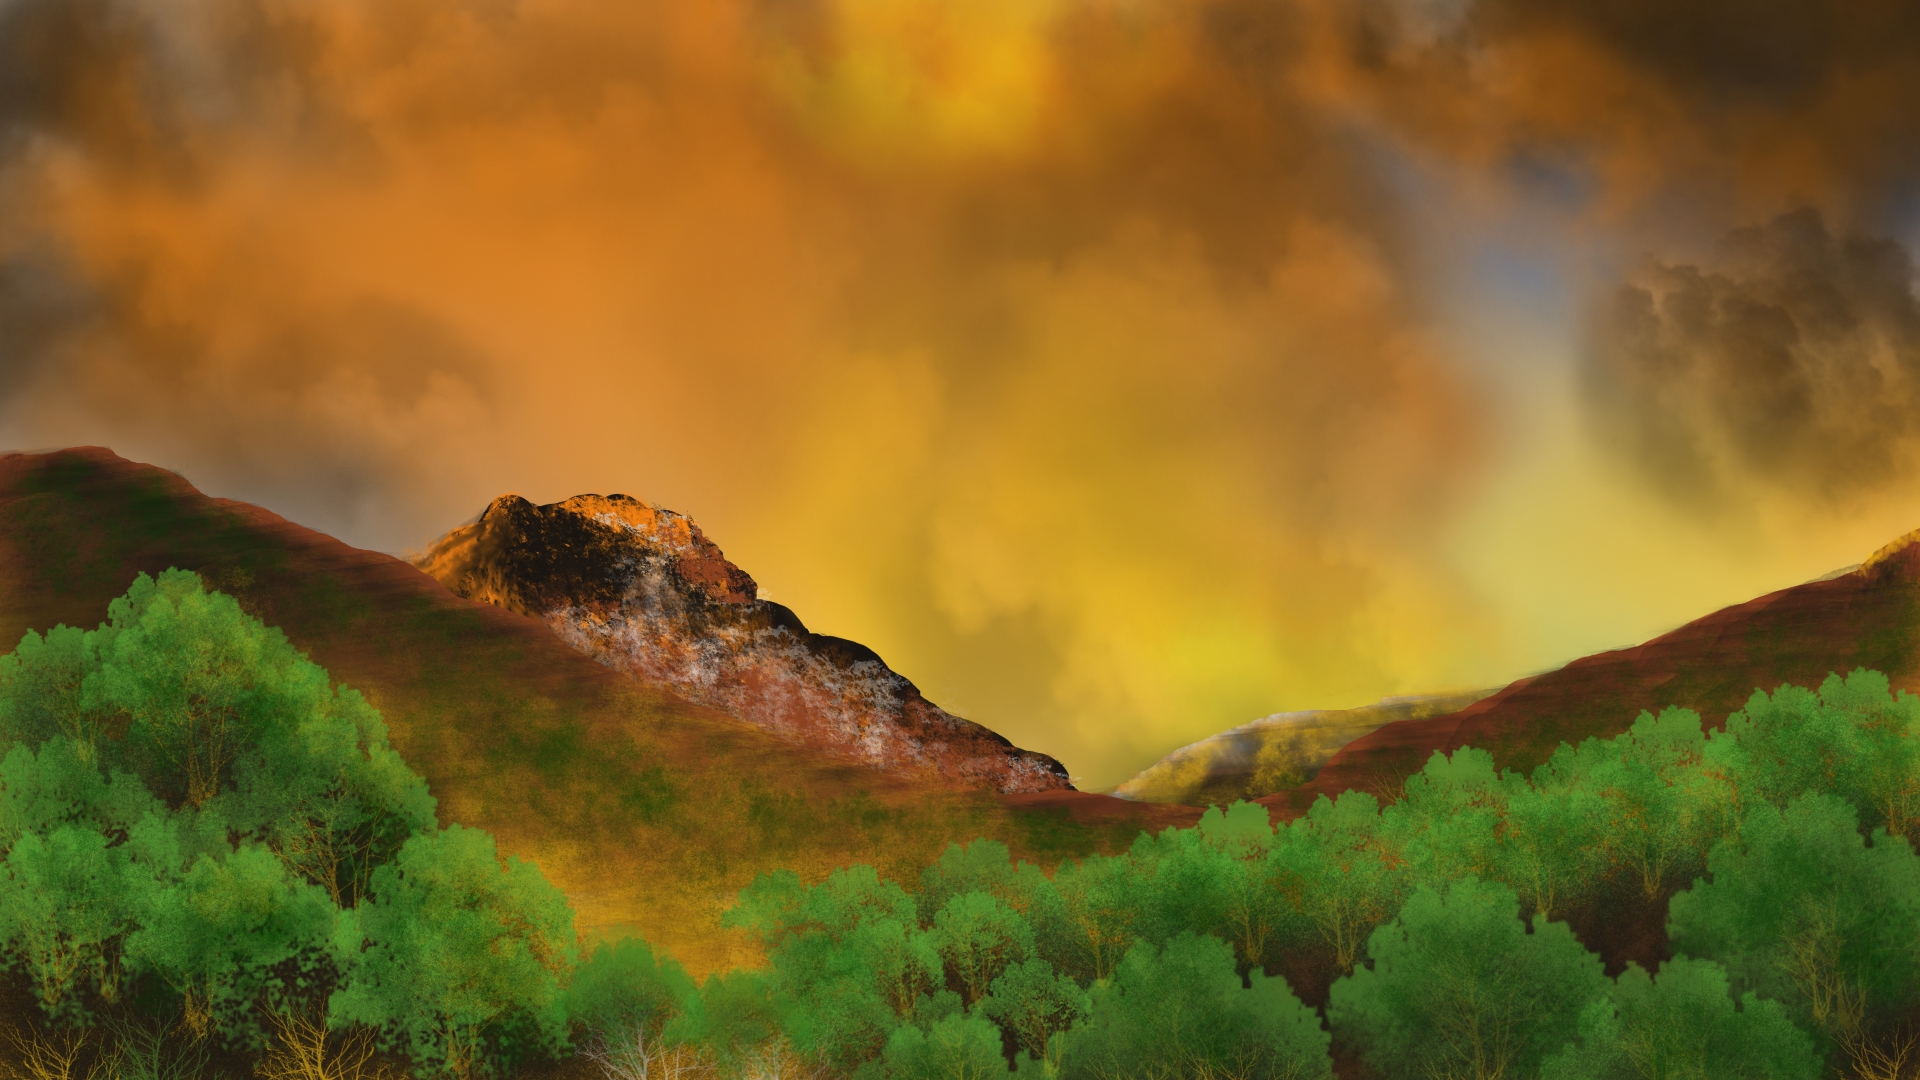 General 1920x1080 digital painting landscape nature mountains trees sky orange sky